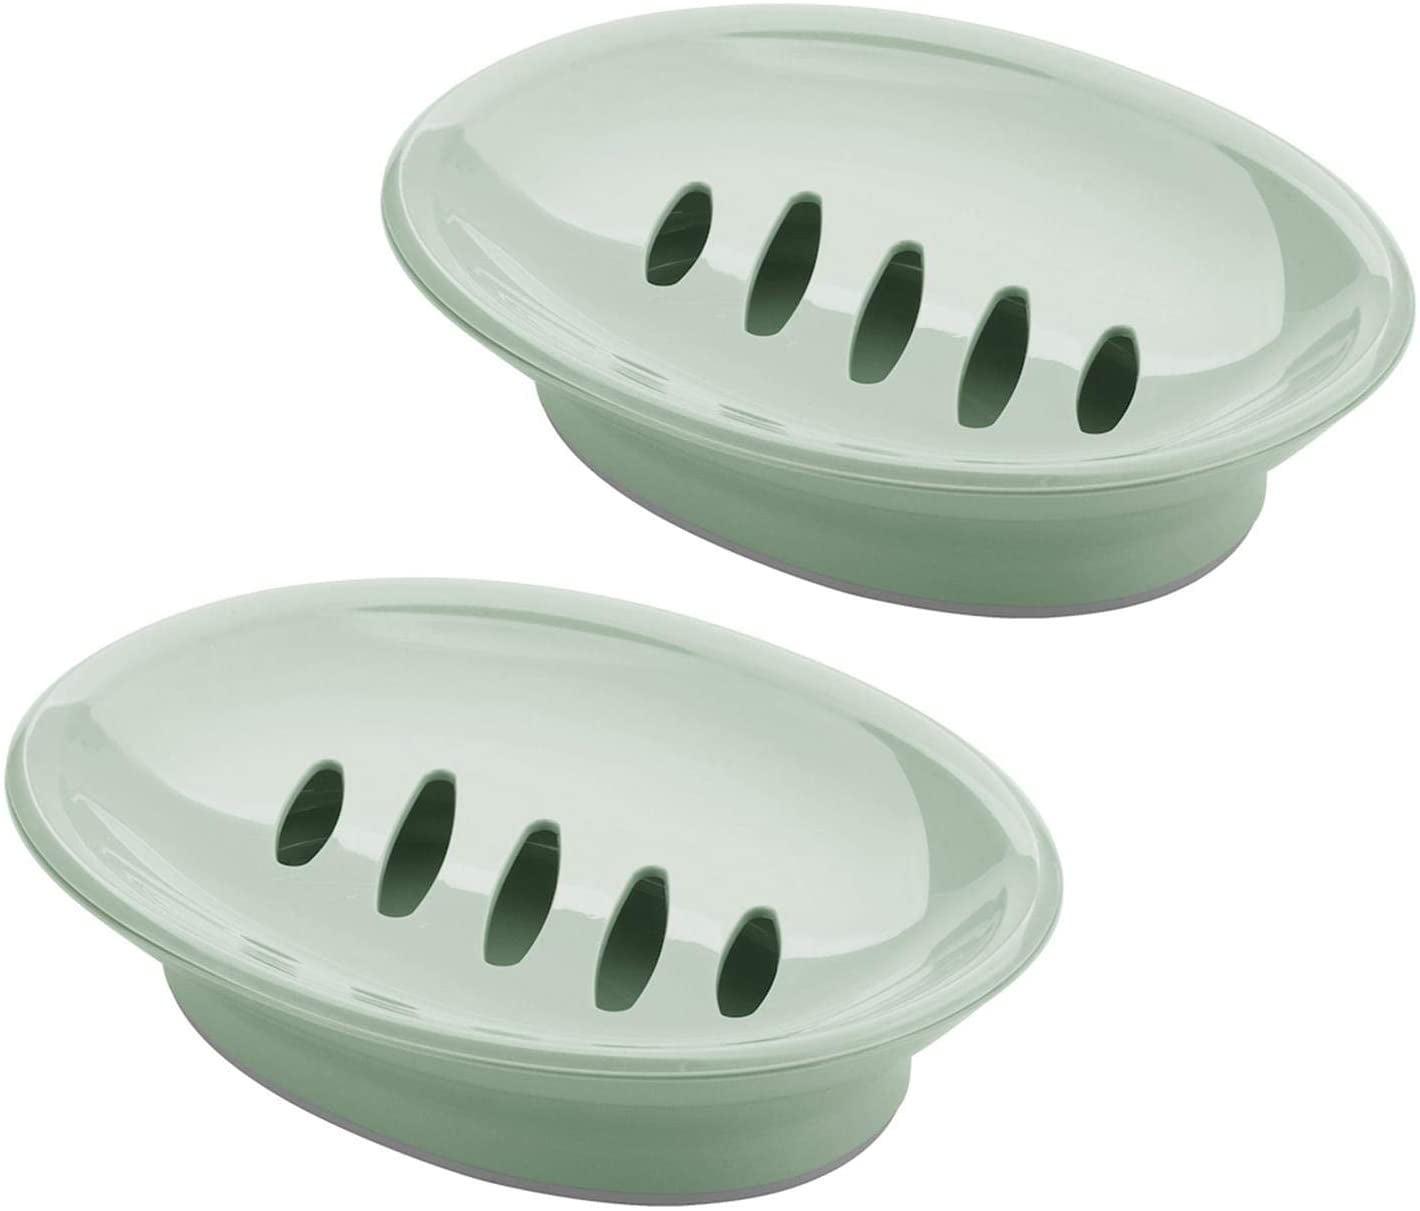 2 x Plastic Oval Soap Box Dish Holder Bathroom Toilet 